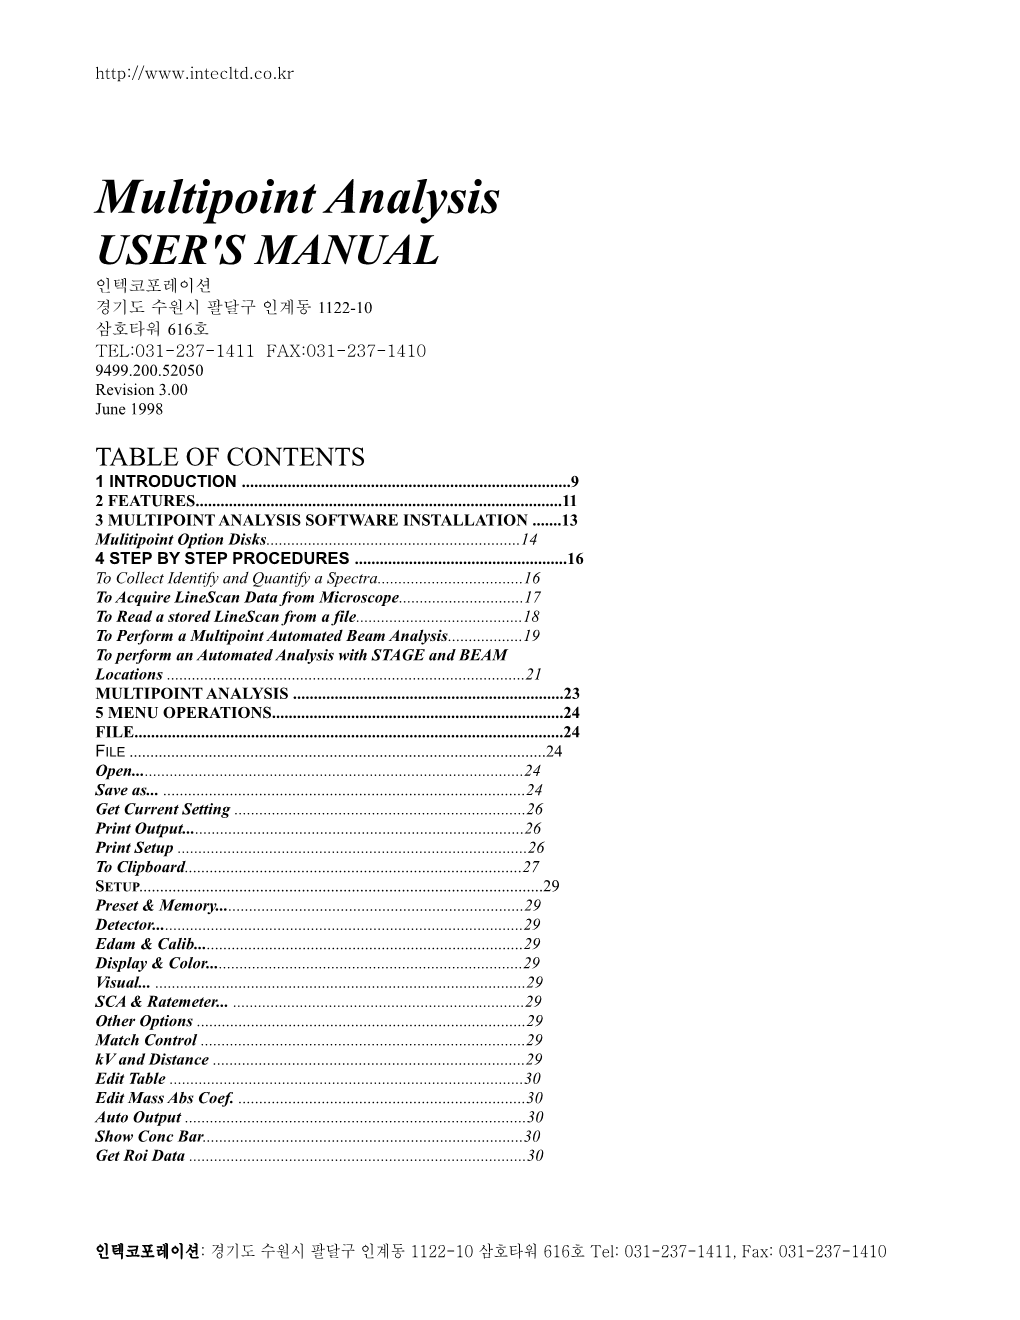 3 Multipoint Analysis Software Installation 13